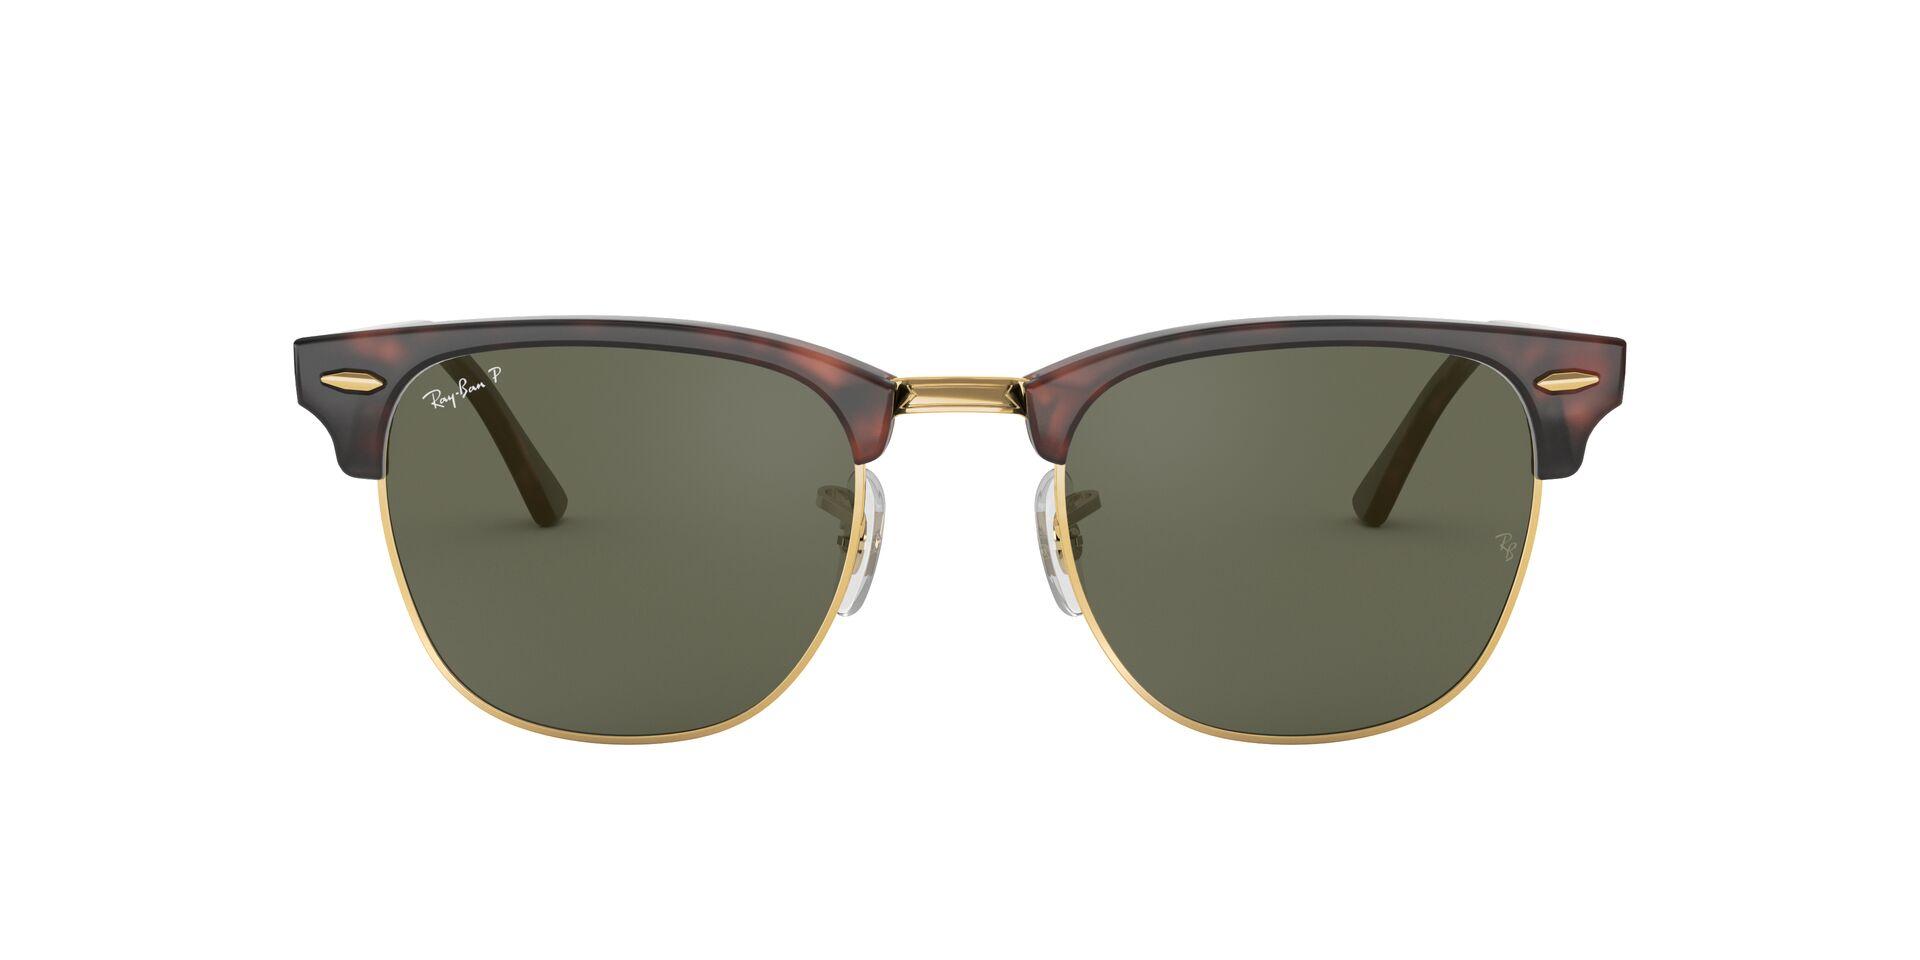 Mắt Kính RAY-BAN CLUBMASTER - RB3016F 990/58 -Sunglasses